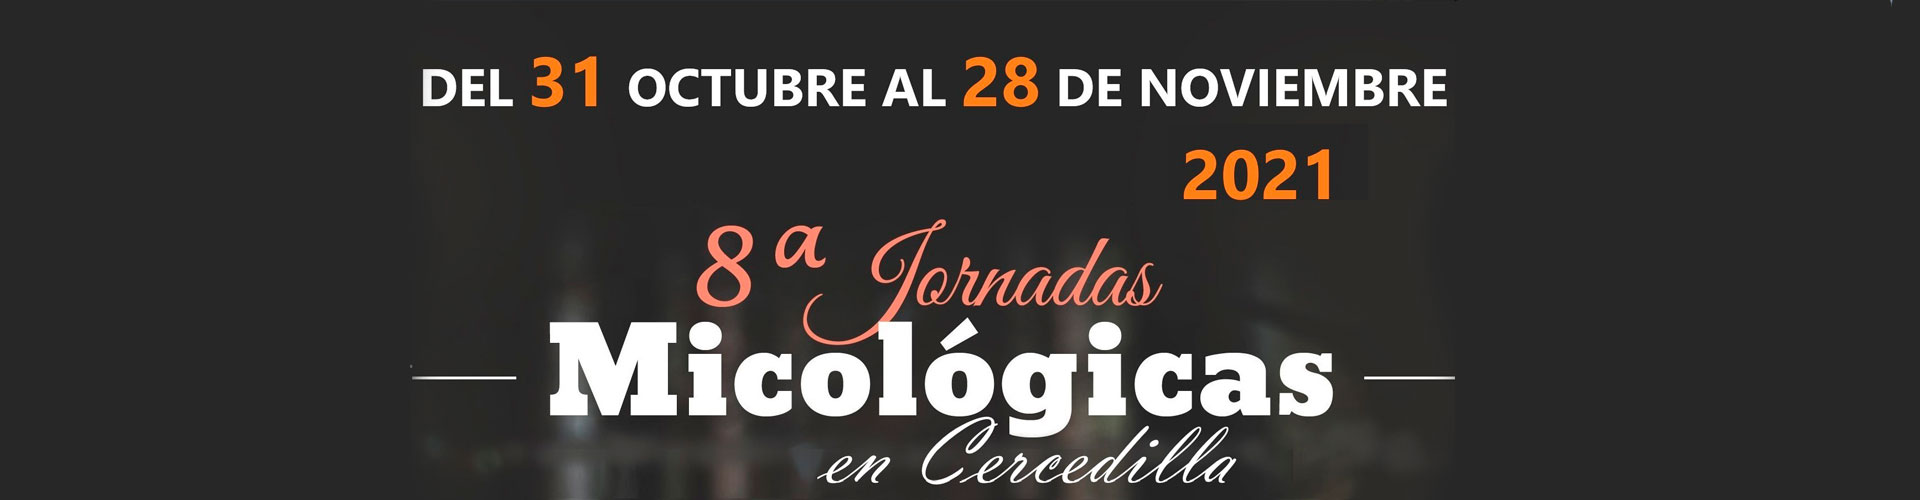 micologicas-2021